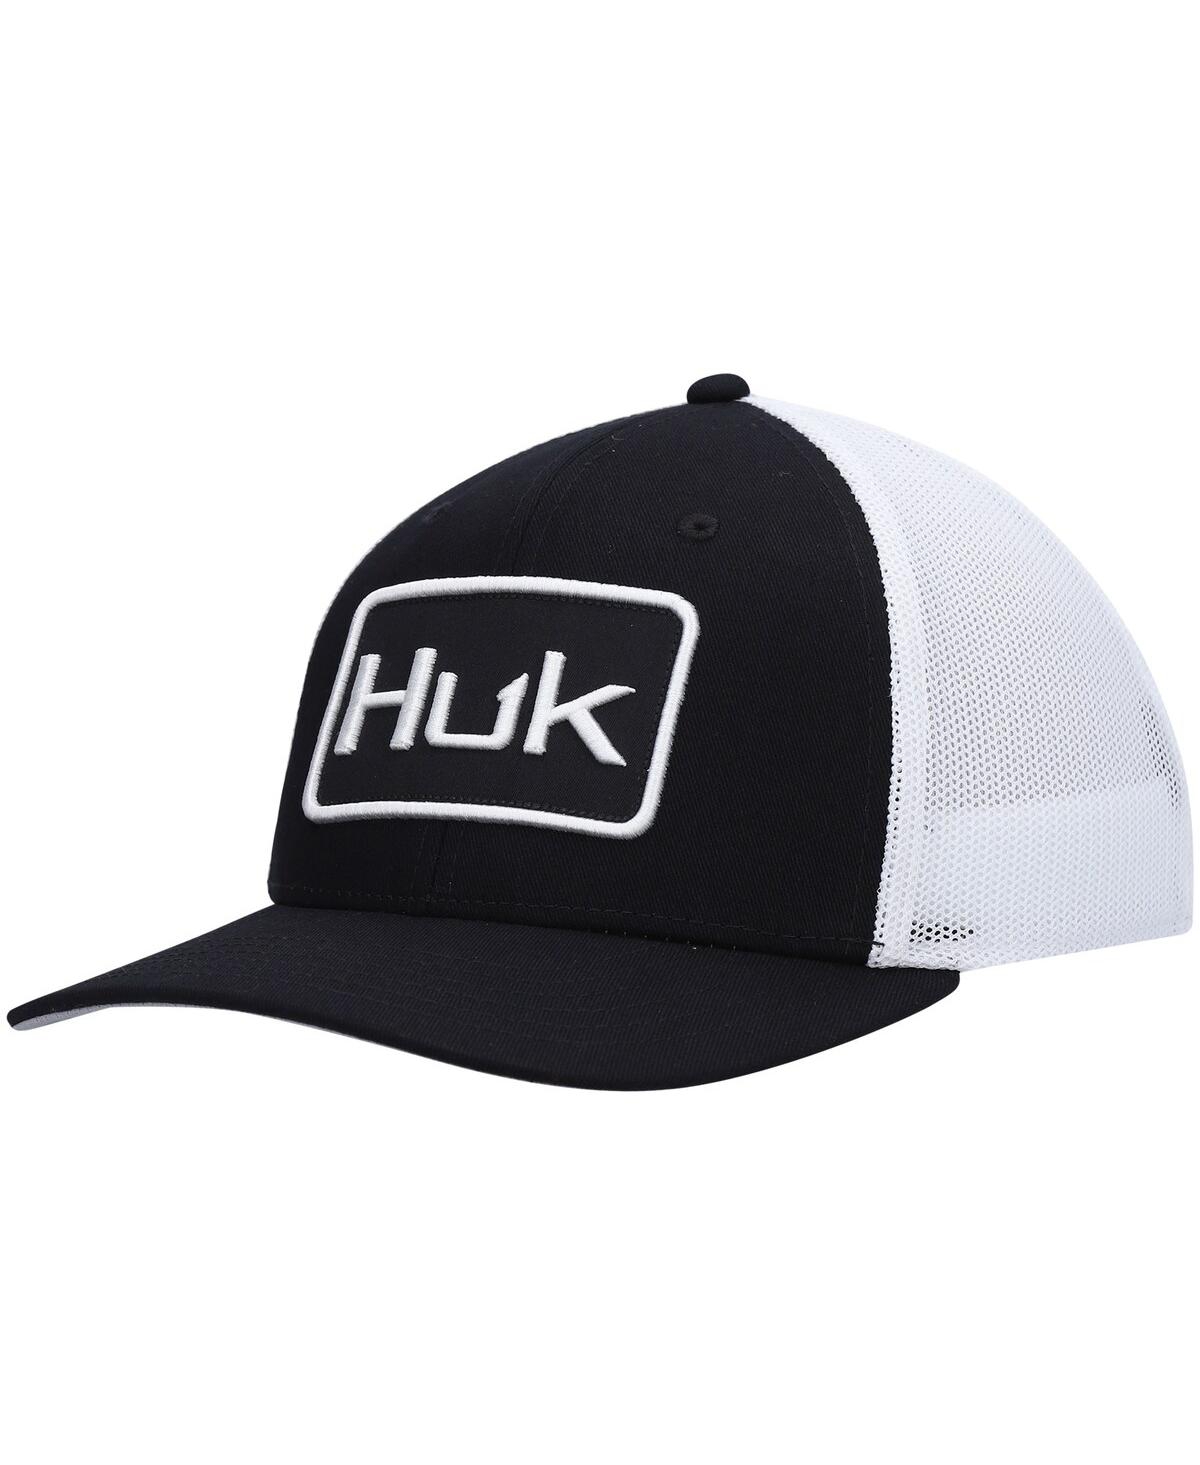 Men's Huk Black Solid Trucker Flex Hat - Black